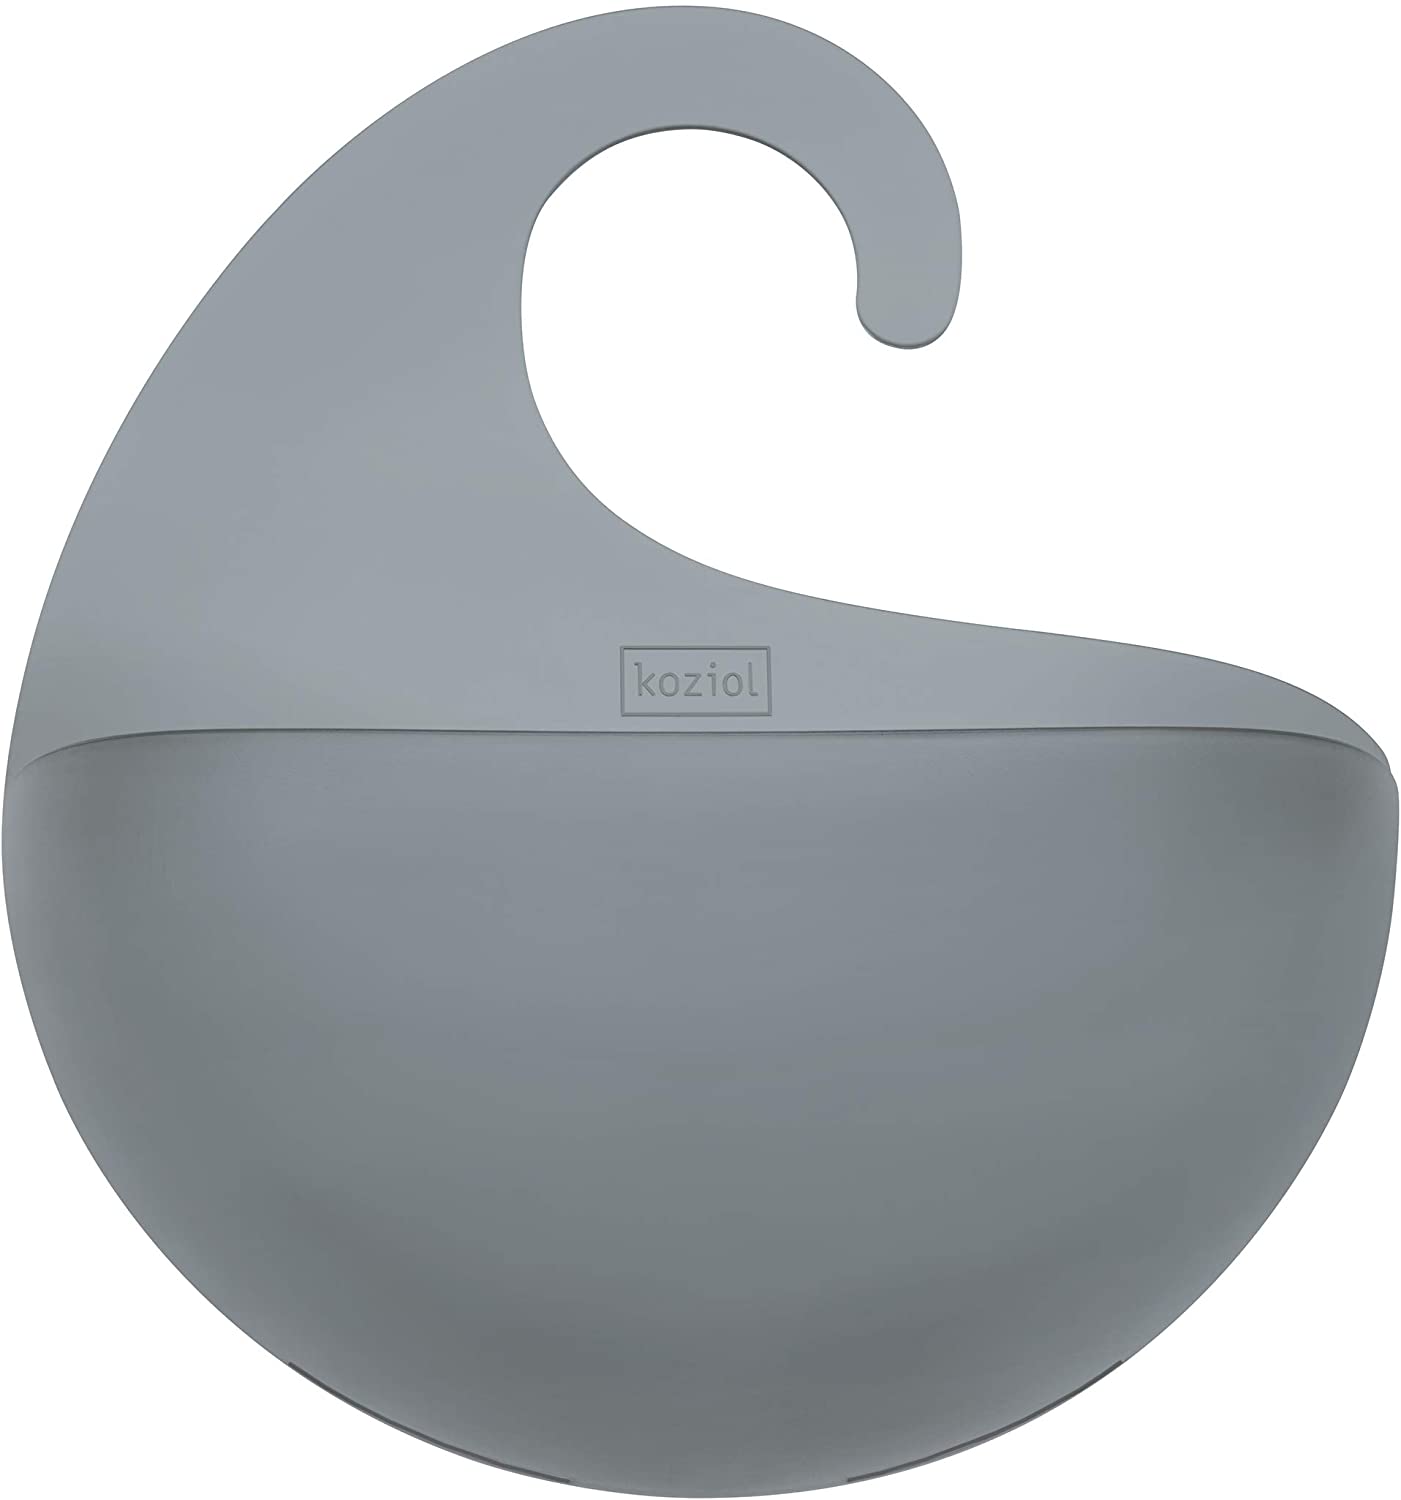 Koziol Utensilo Surf XS, Plastic, Solid White, 5.3 x 15 x 17.6 cm, Transparent anthracite, x-small